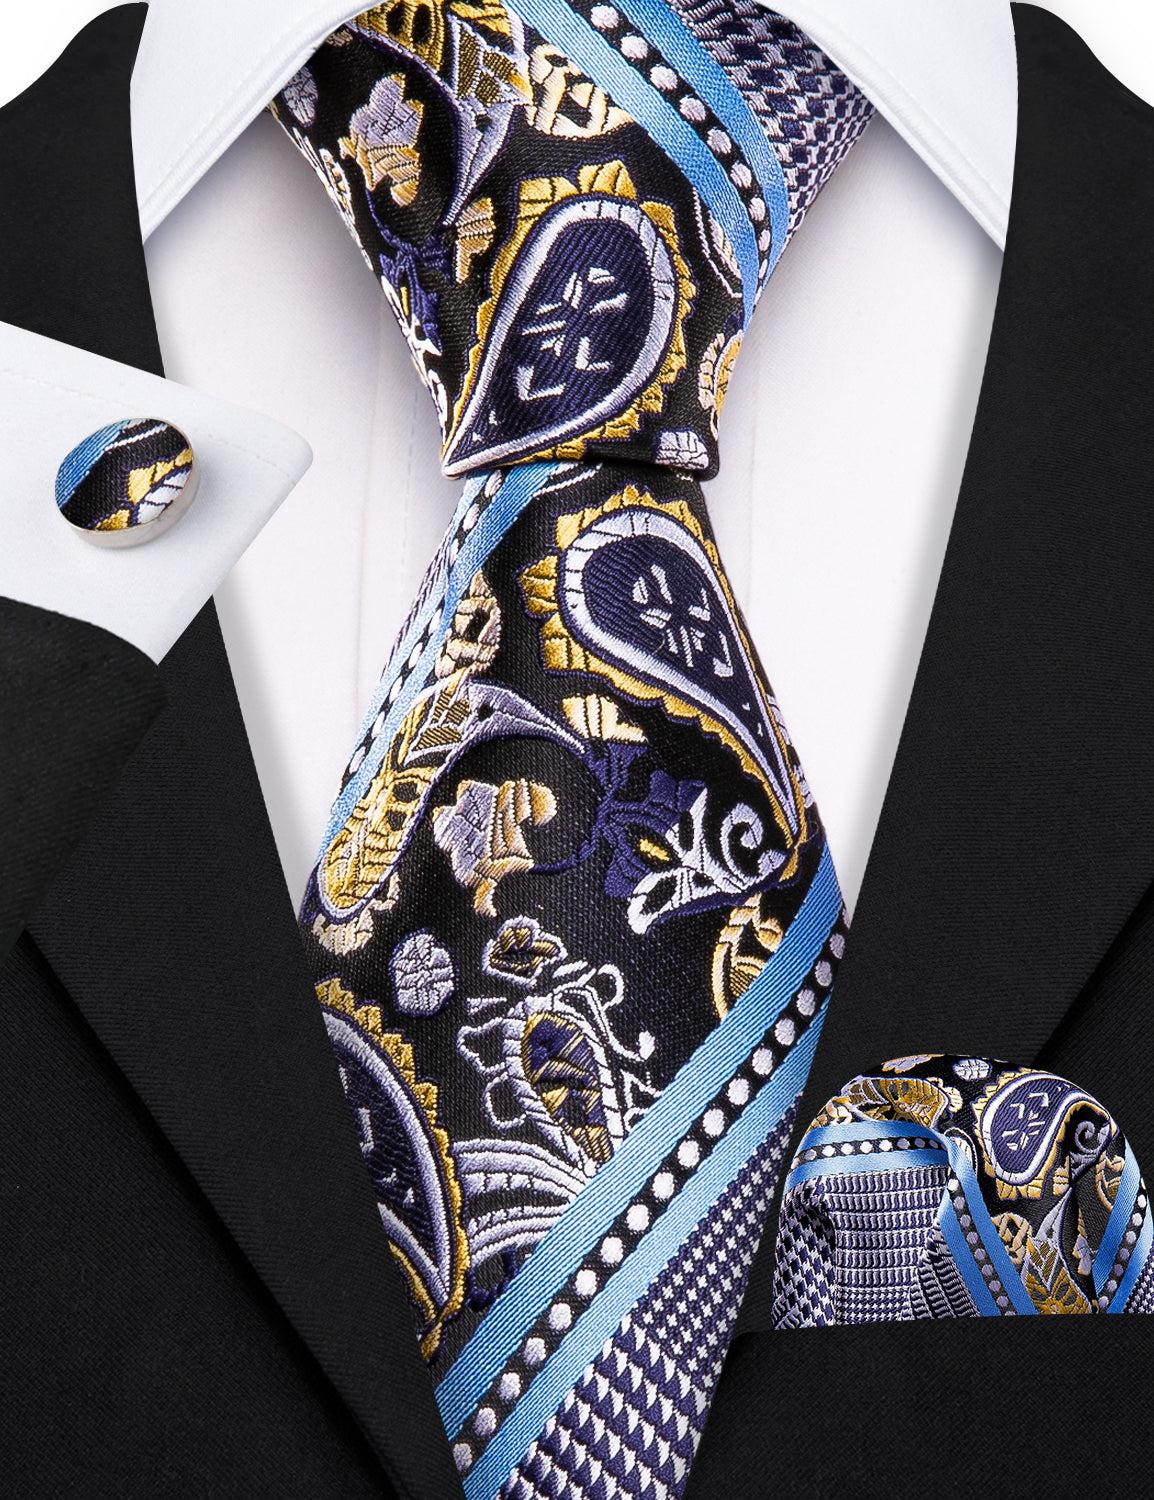 Grey Blue Novelty Tie Pocket Square Cufflinks Set